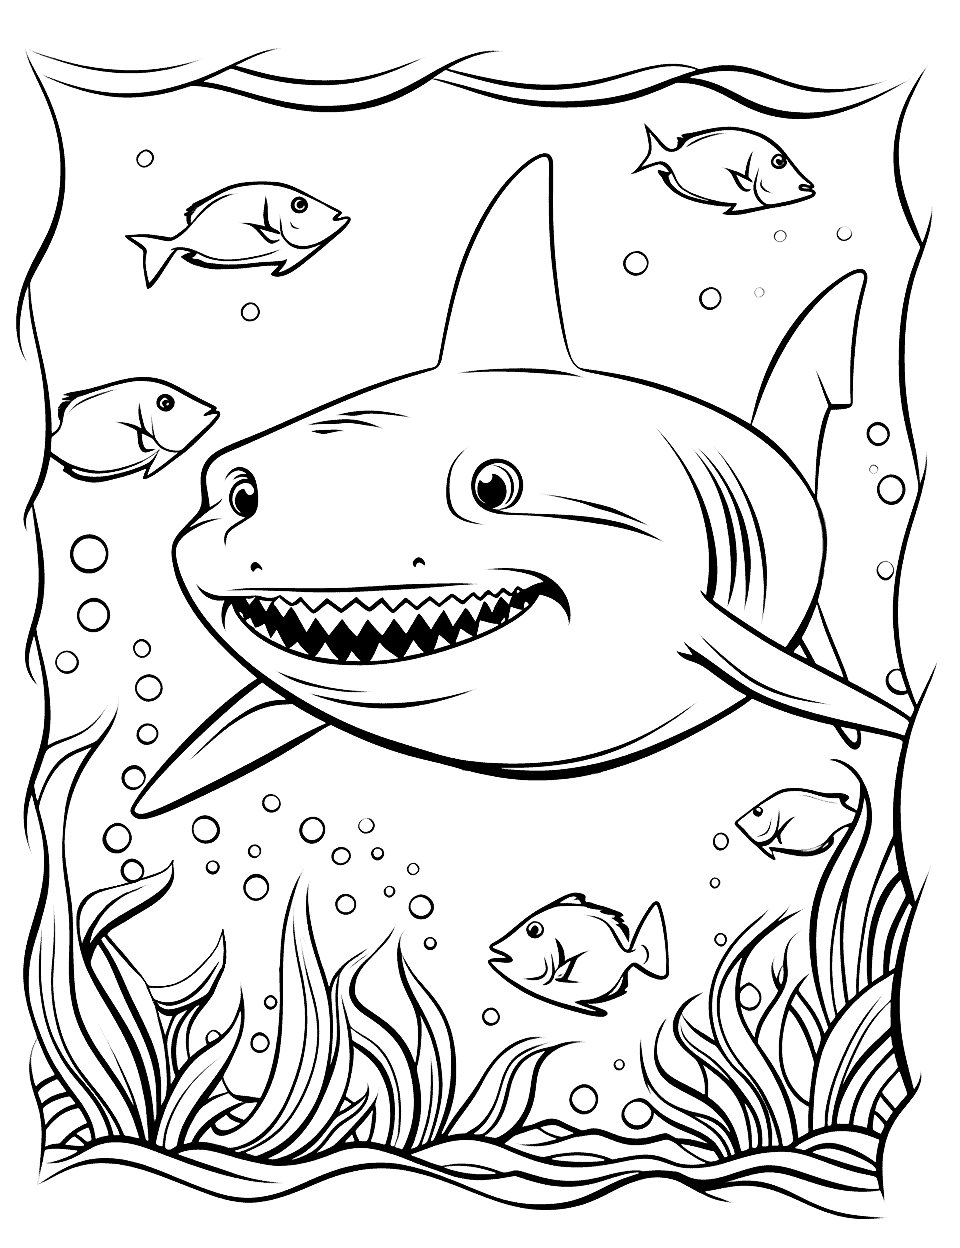 Shark's Seafood Feast Shark Coloring Page - A hungry shark enjoying a seafood feast.